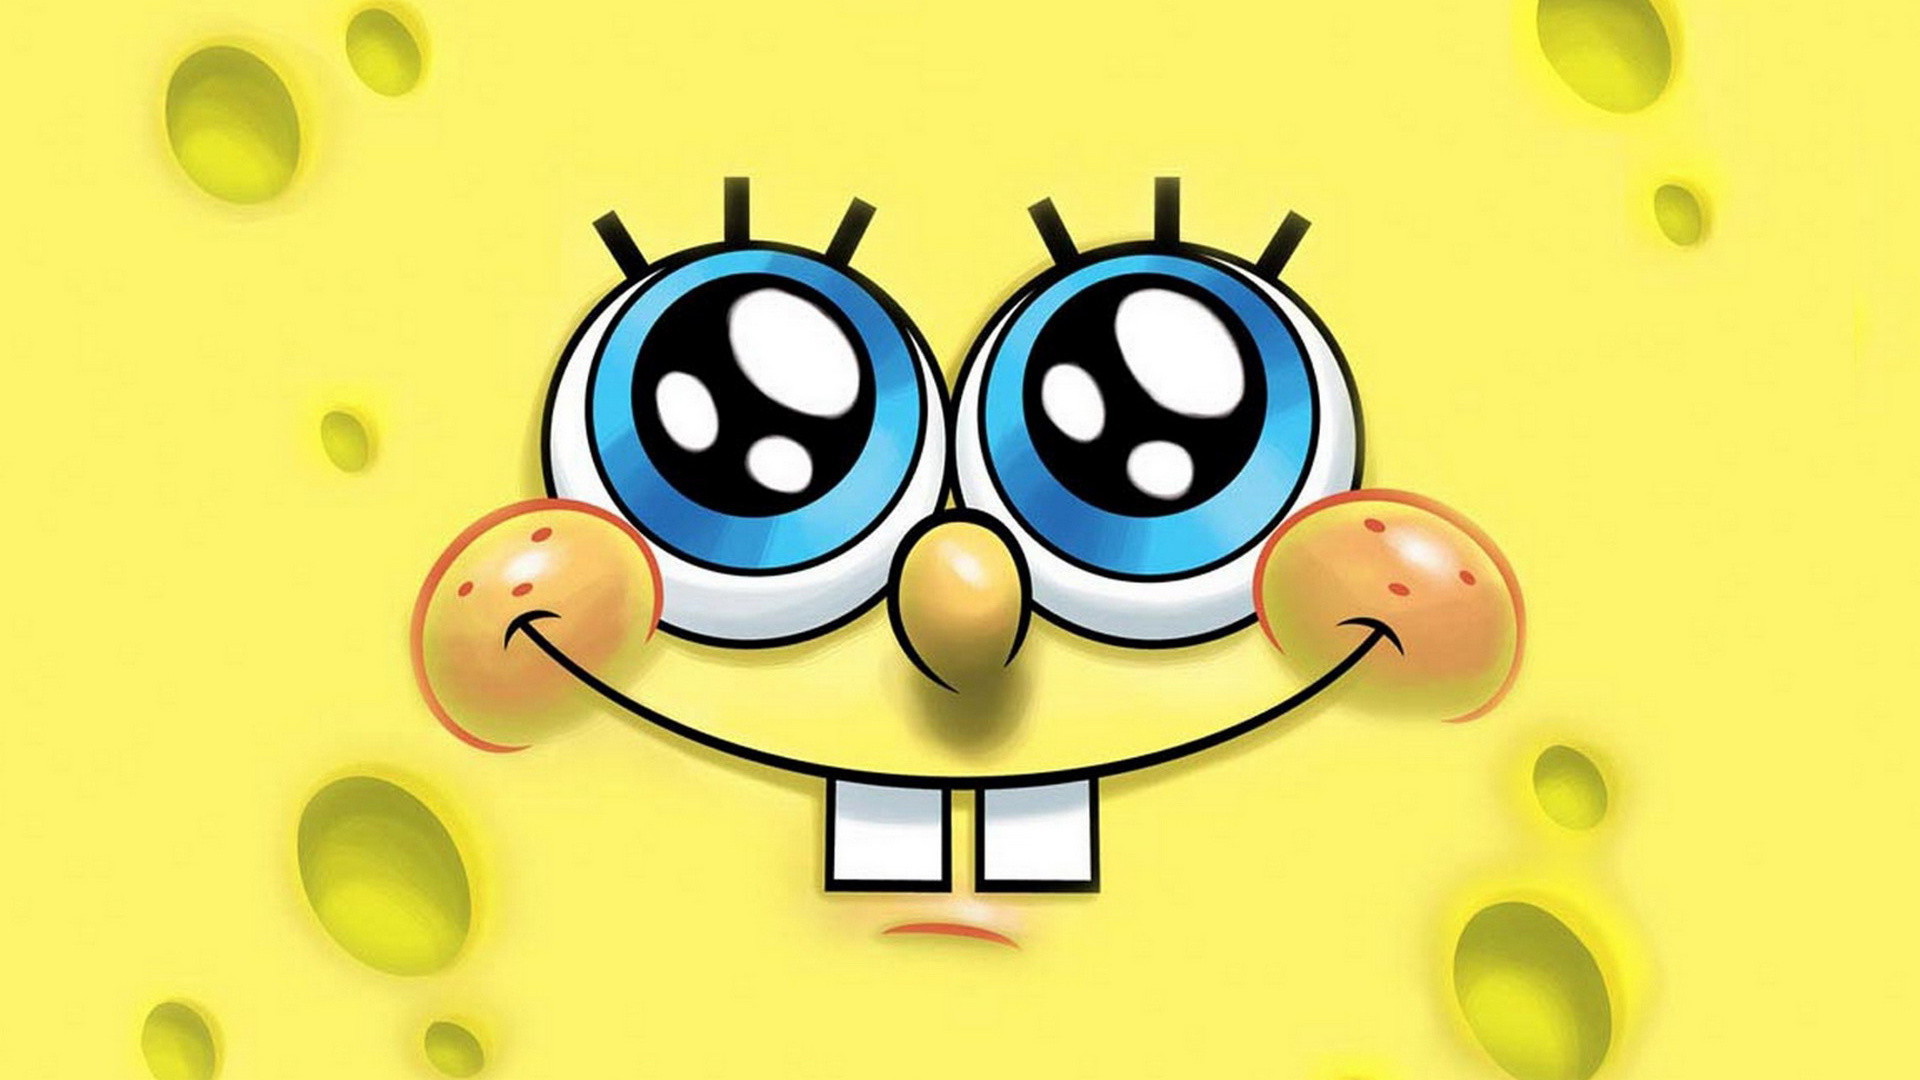 Spongebob Squarepants Wallpaper Funny Pictures Image